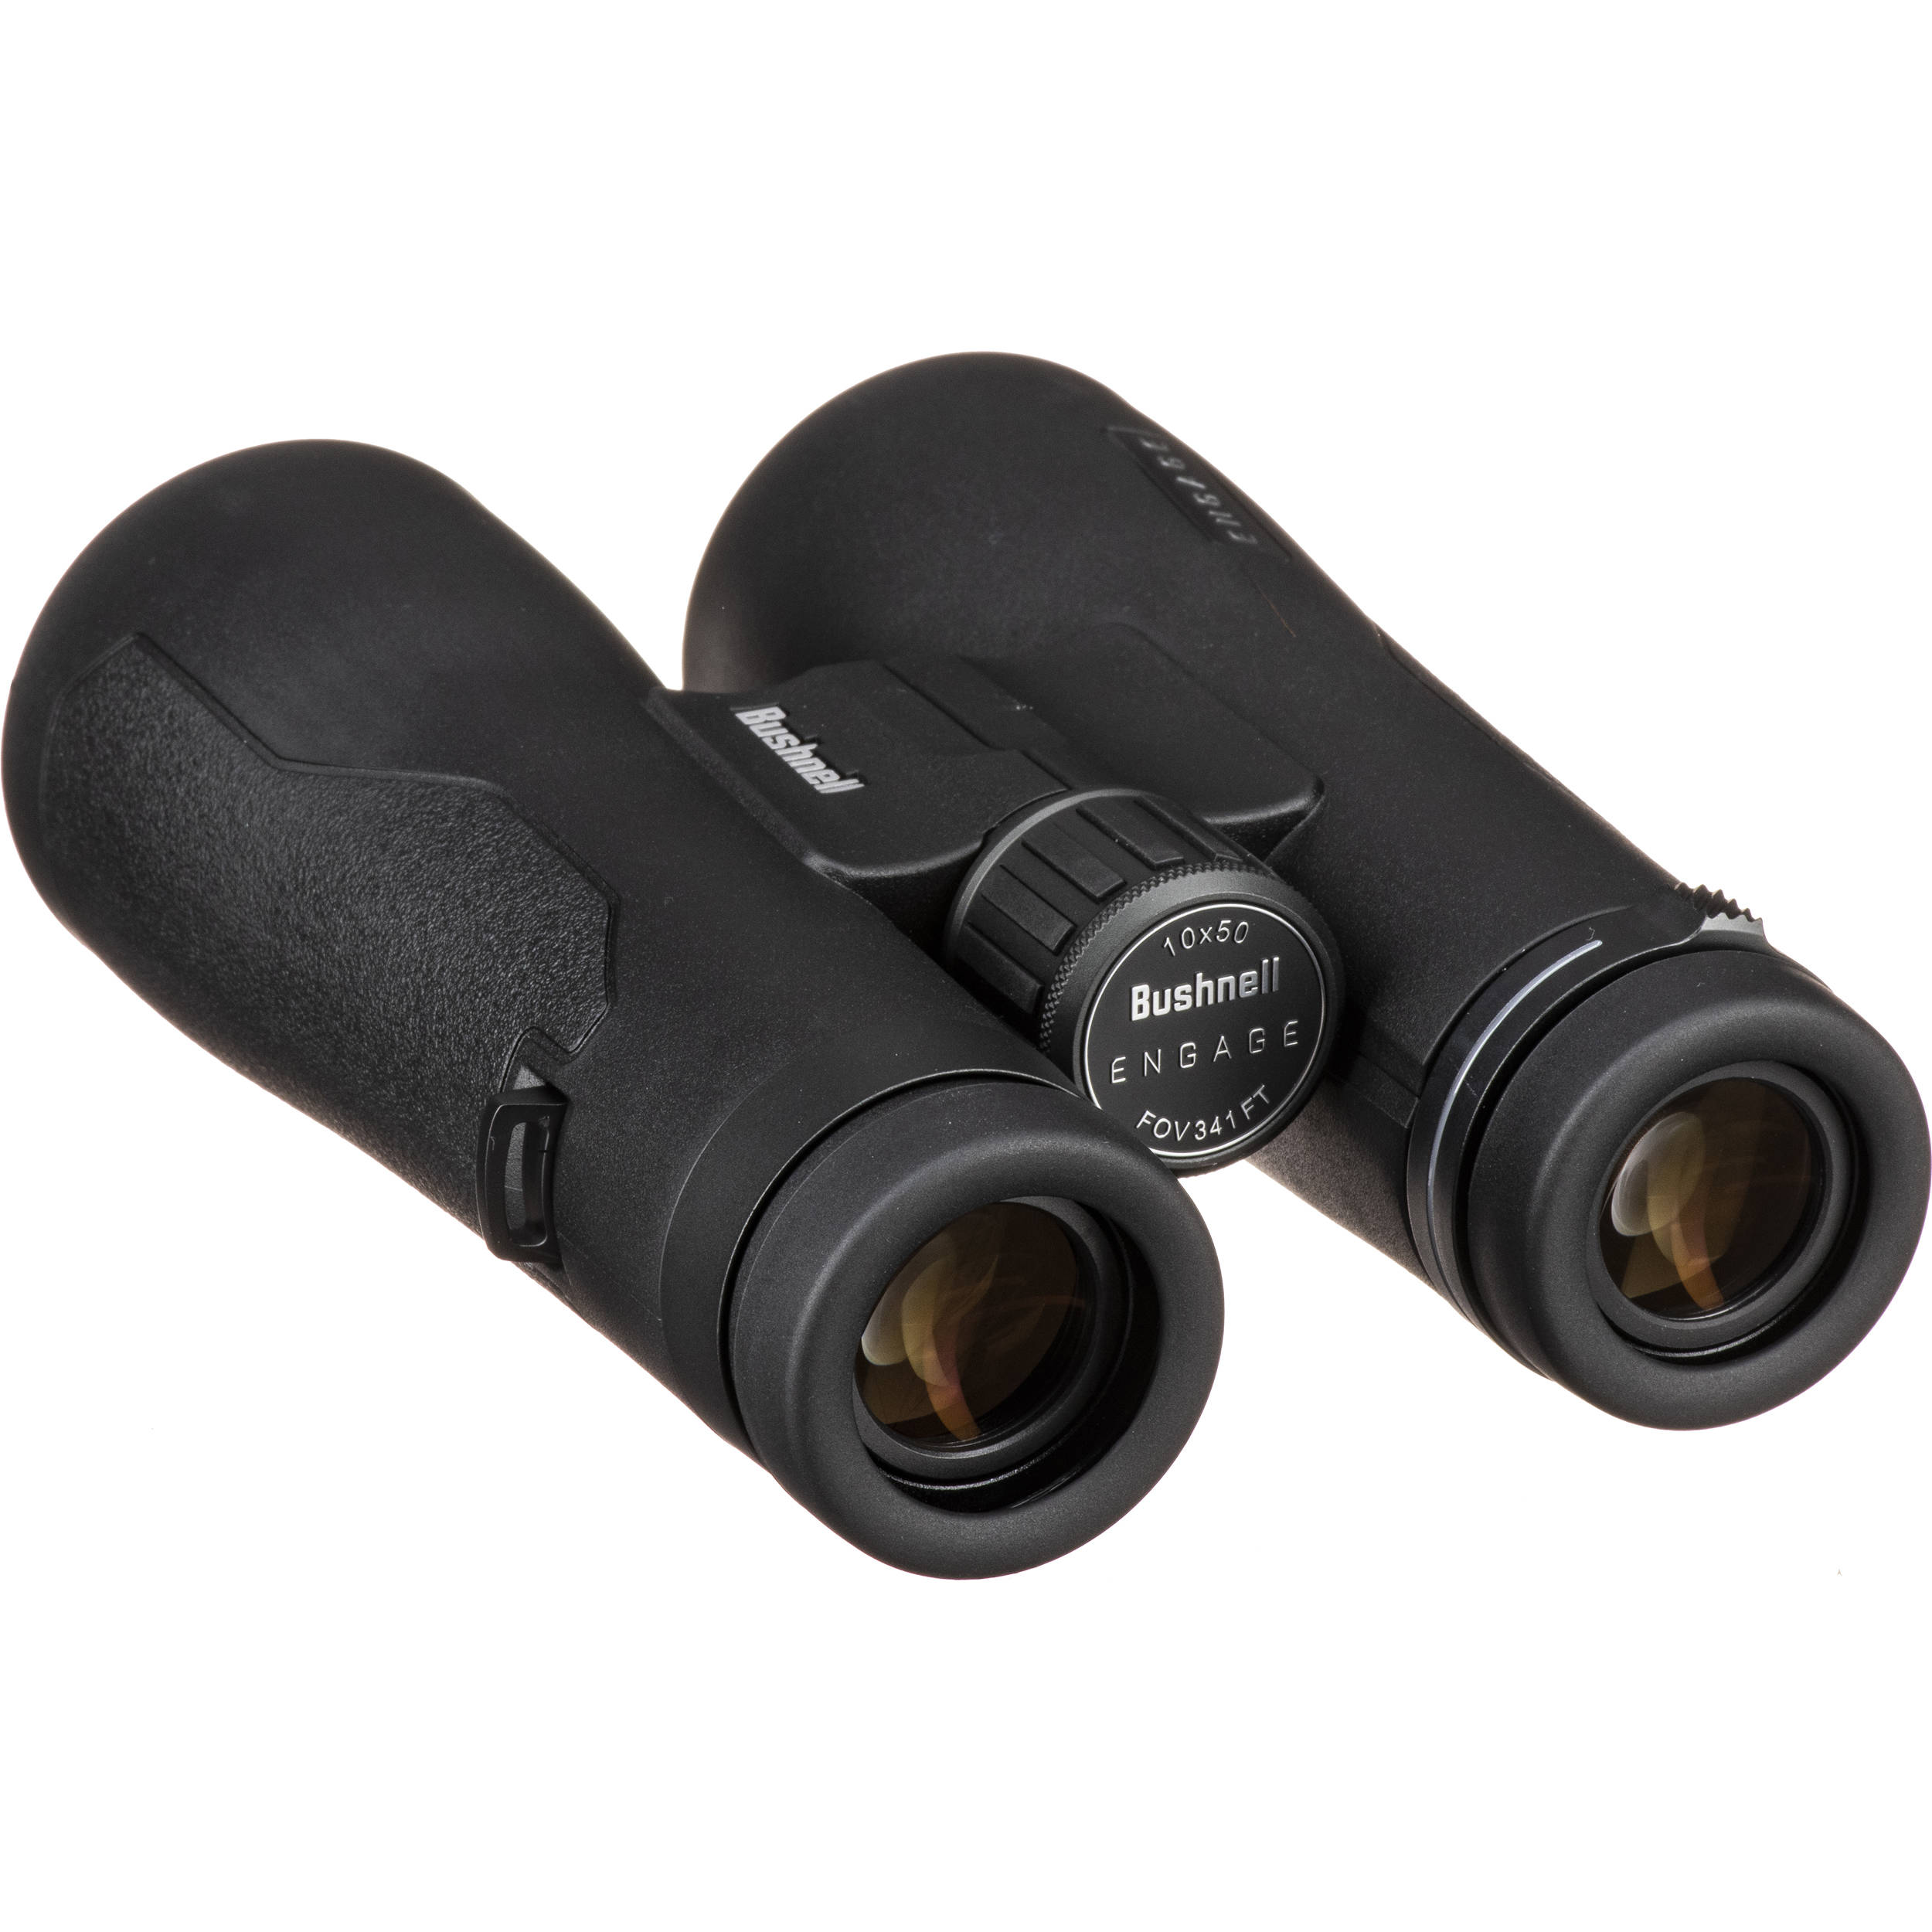 Bushnell 10x50 Engage Waterproof Binoculars